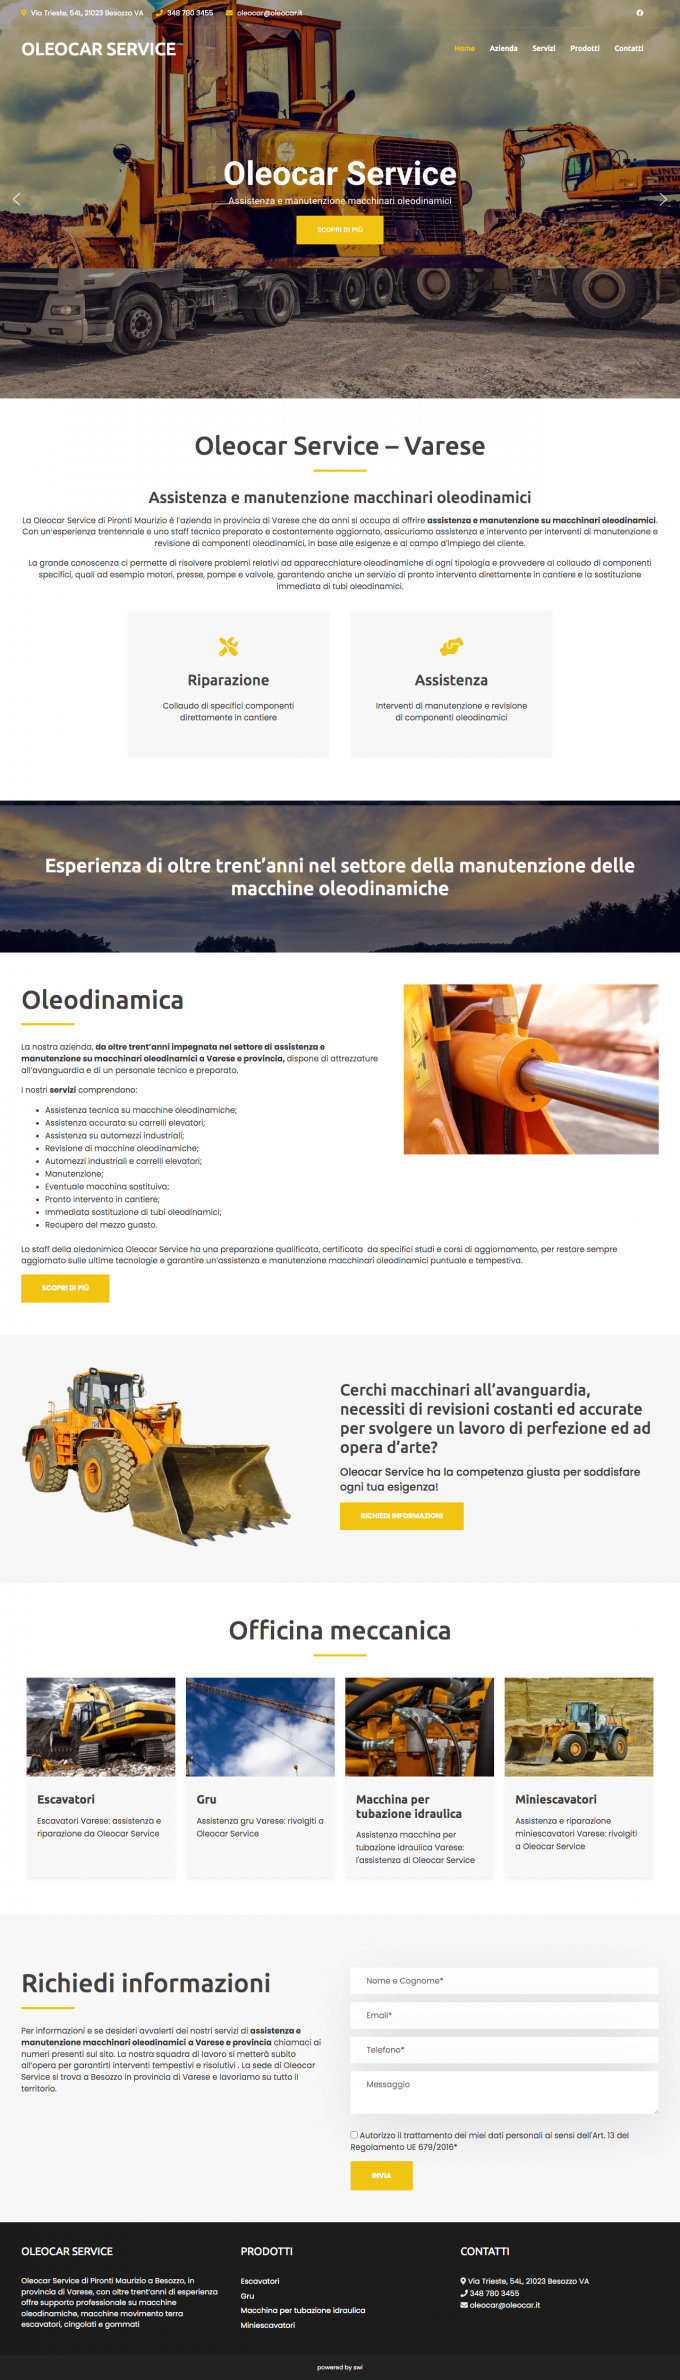 Oleocar Service &#8211; Assistenza e manutenzione macchinari oleodinamici &#8211; Varese